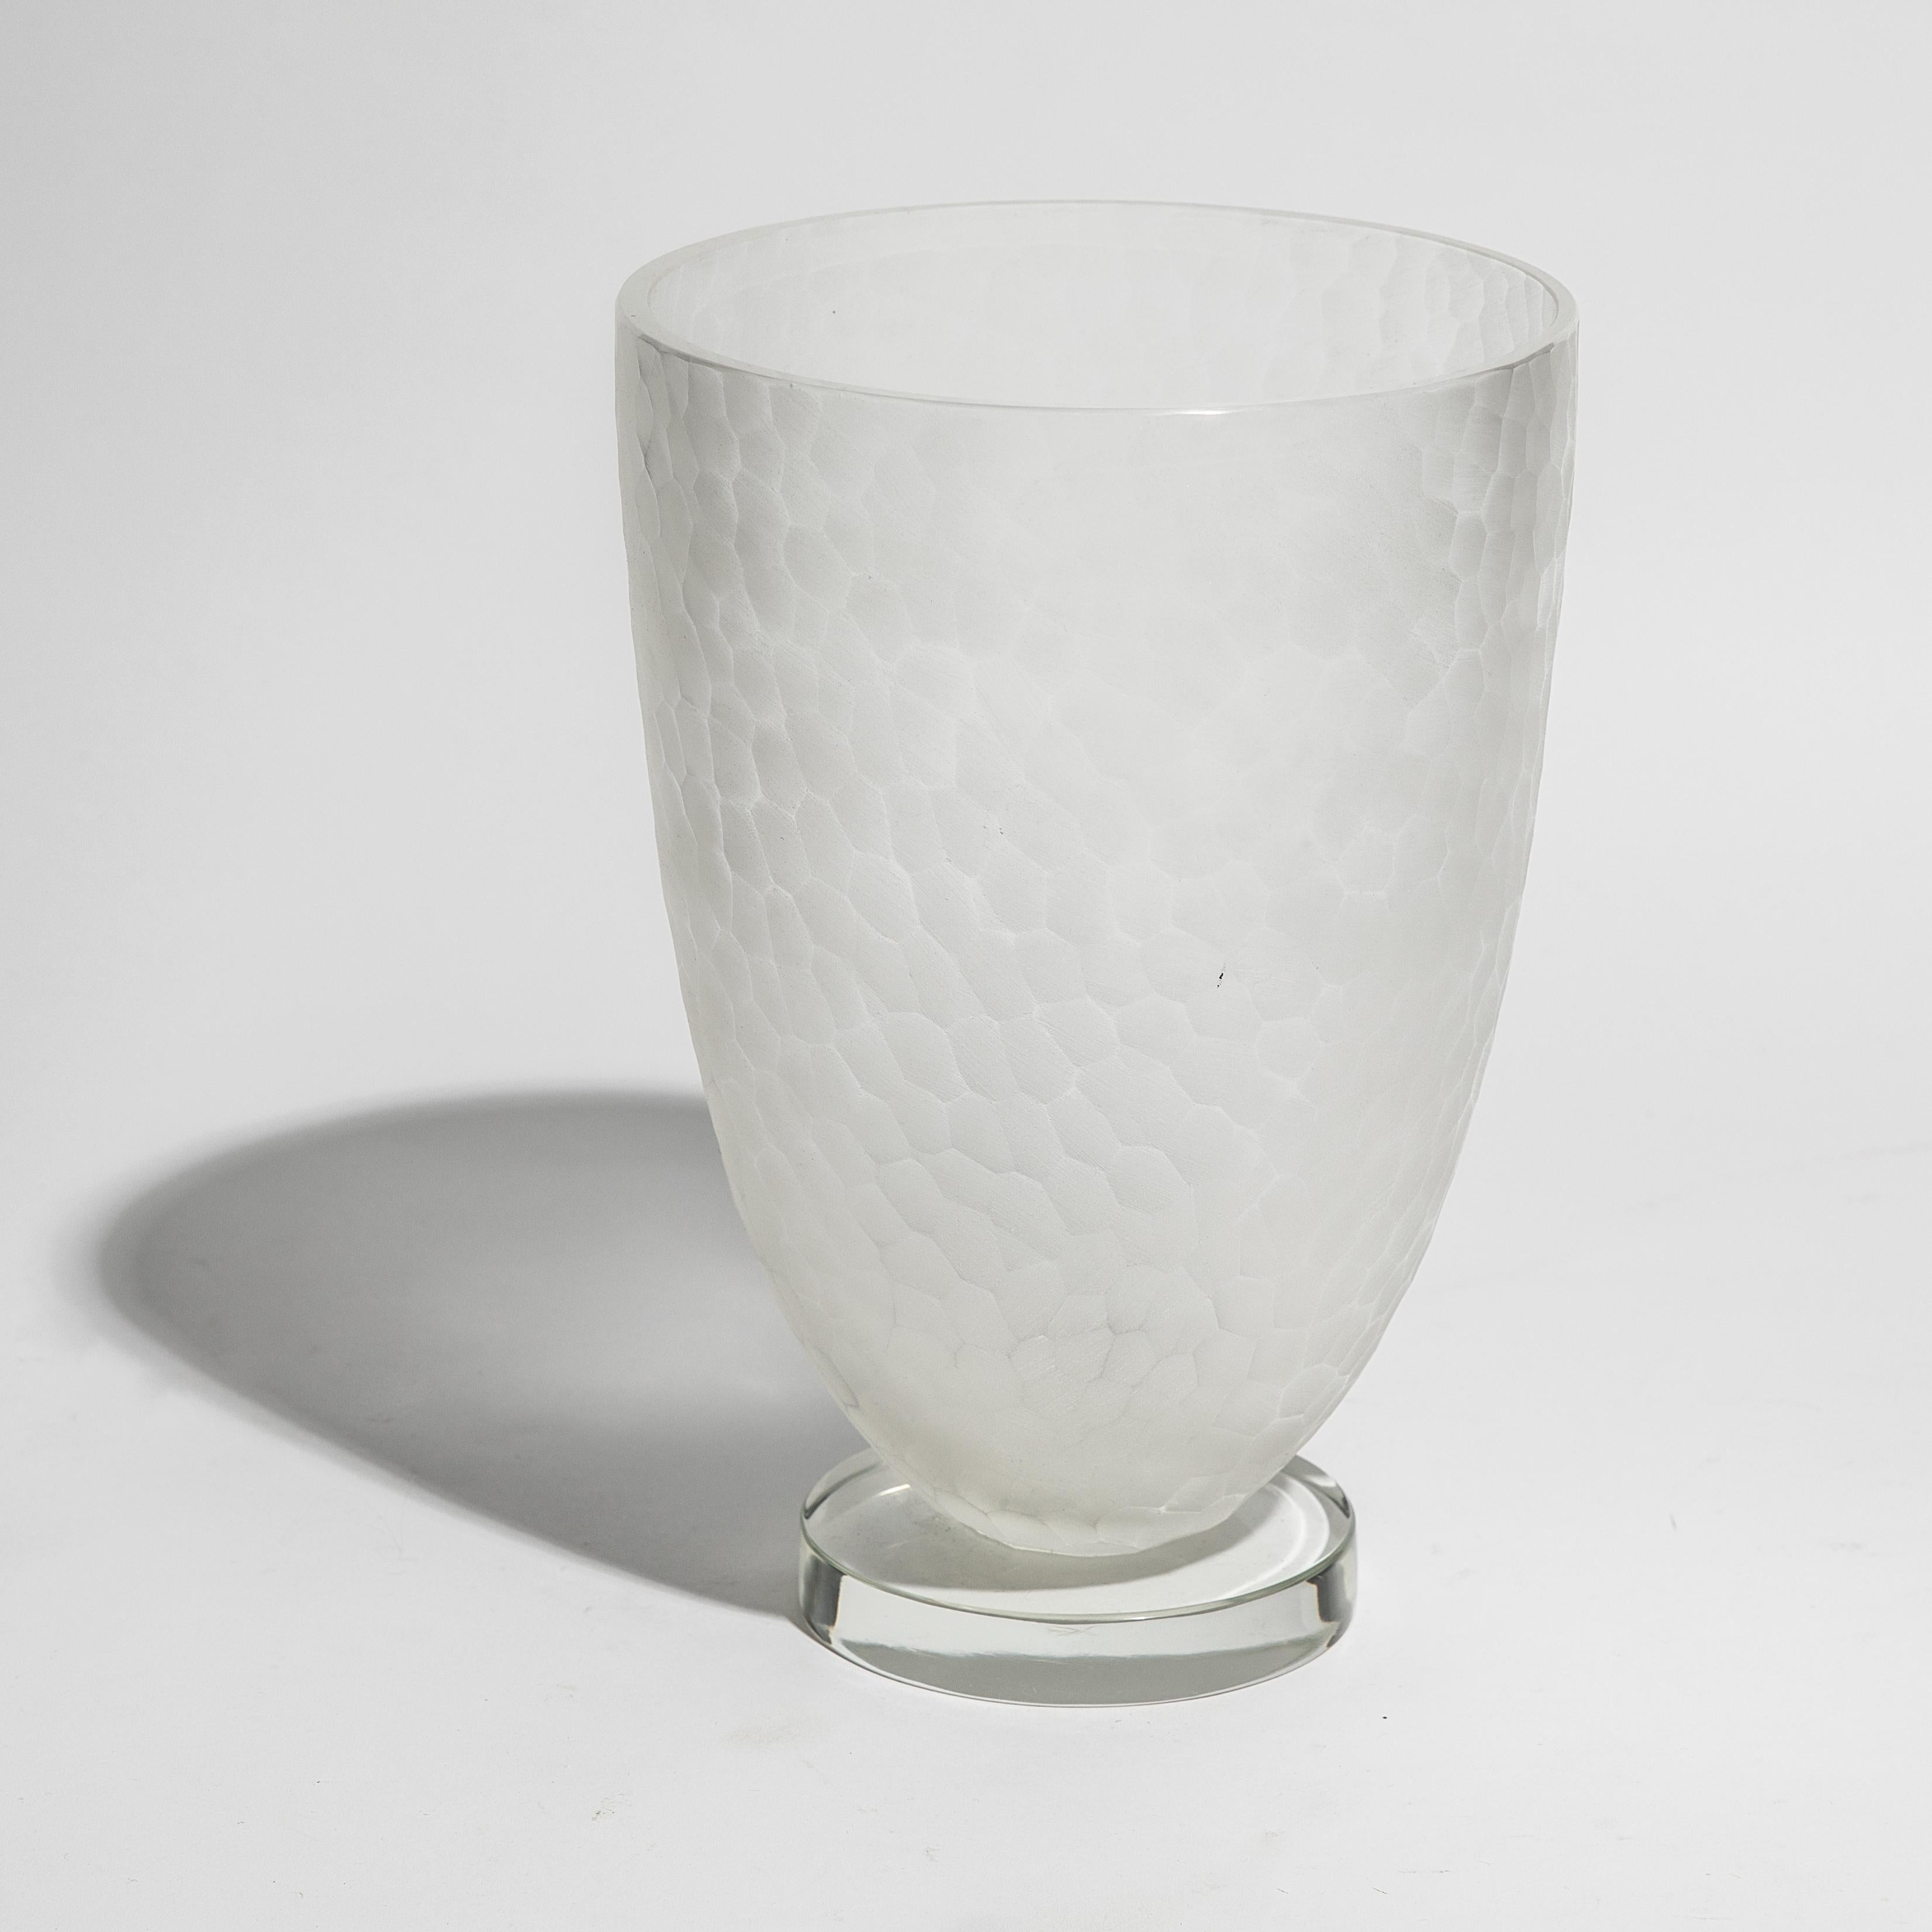 Seguso 20th century signed Art Glass vase on acrylic. Measures: 12.5